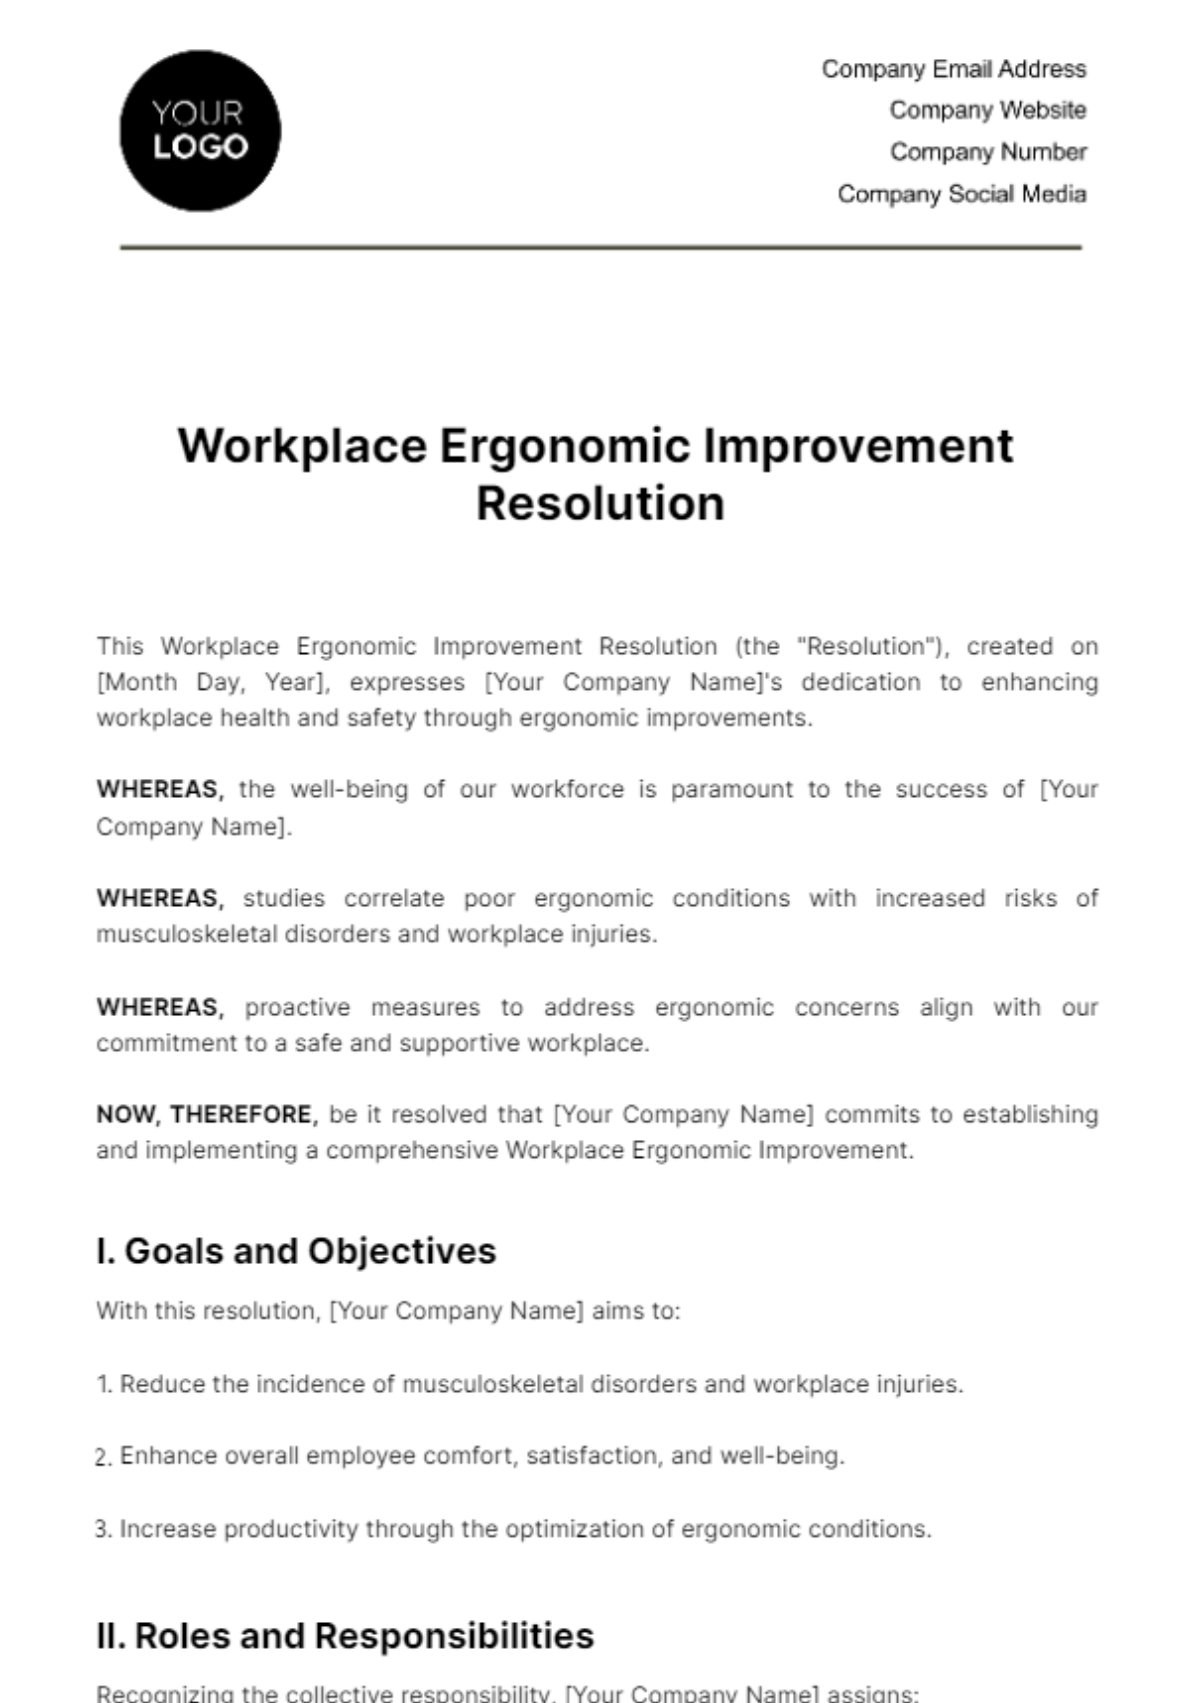 Workplace Ergonomic Improvement Resolution Template